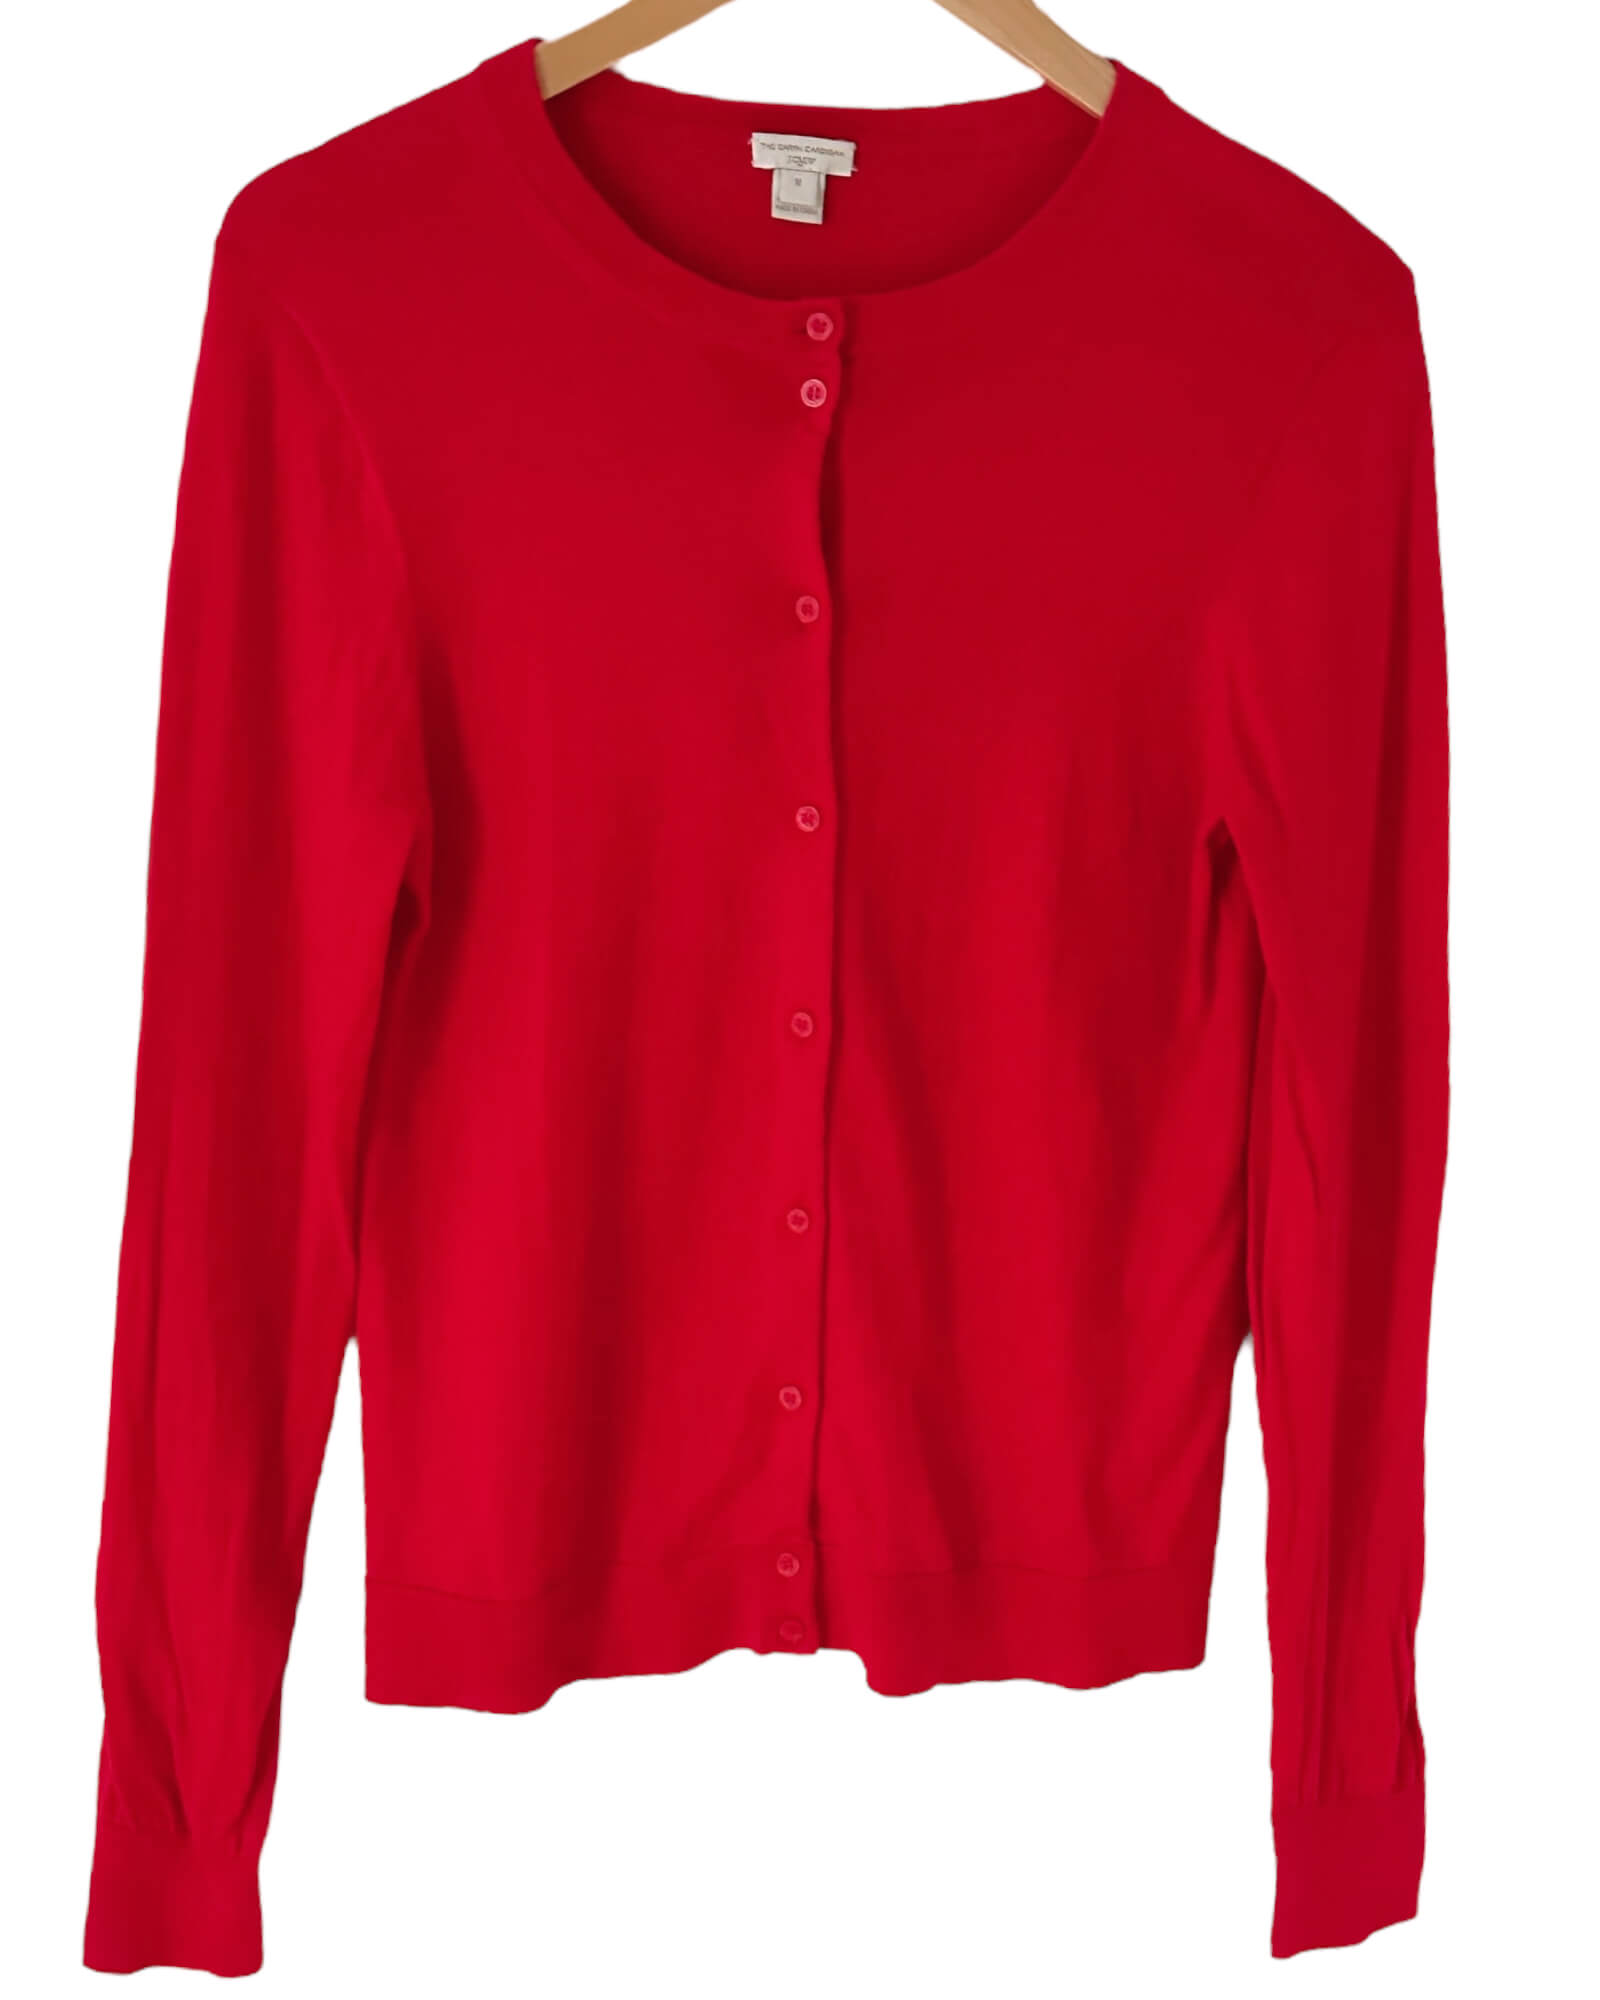 Cool Winter J.CREW heartthrob red cardigan sweater